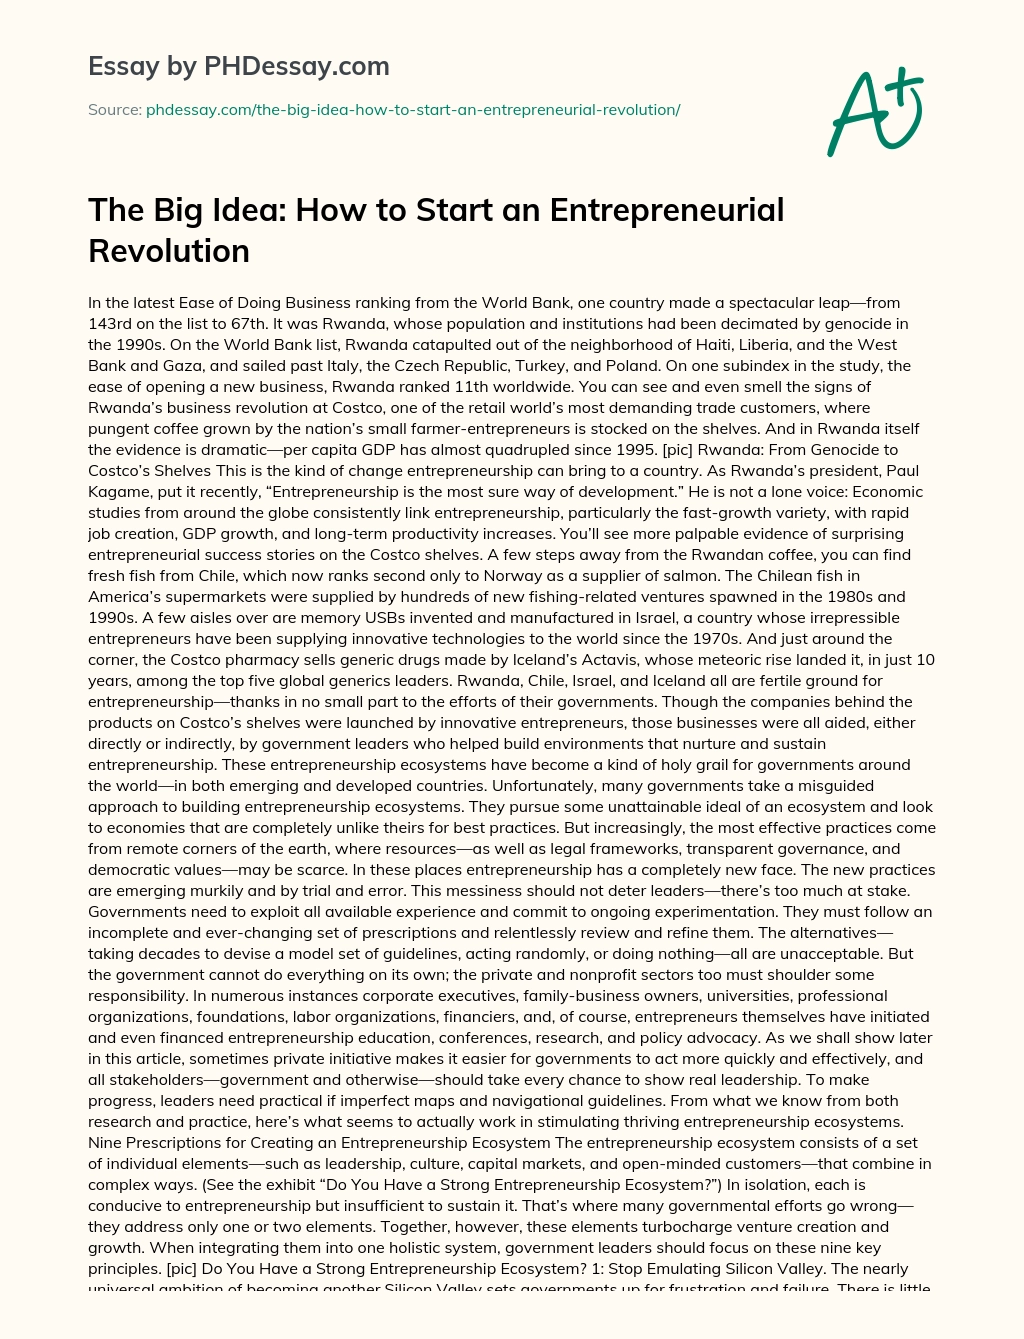 The Big Idea: How to Start an Entrepreneurial Revolution essay